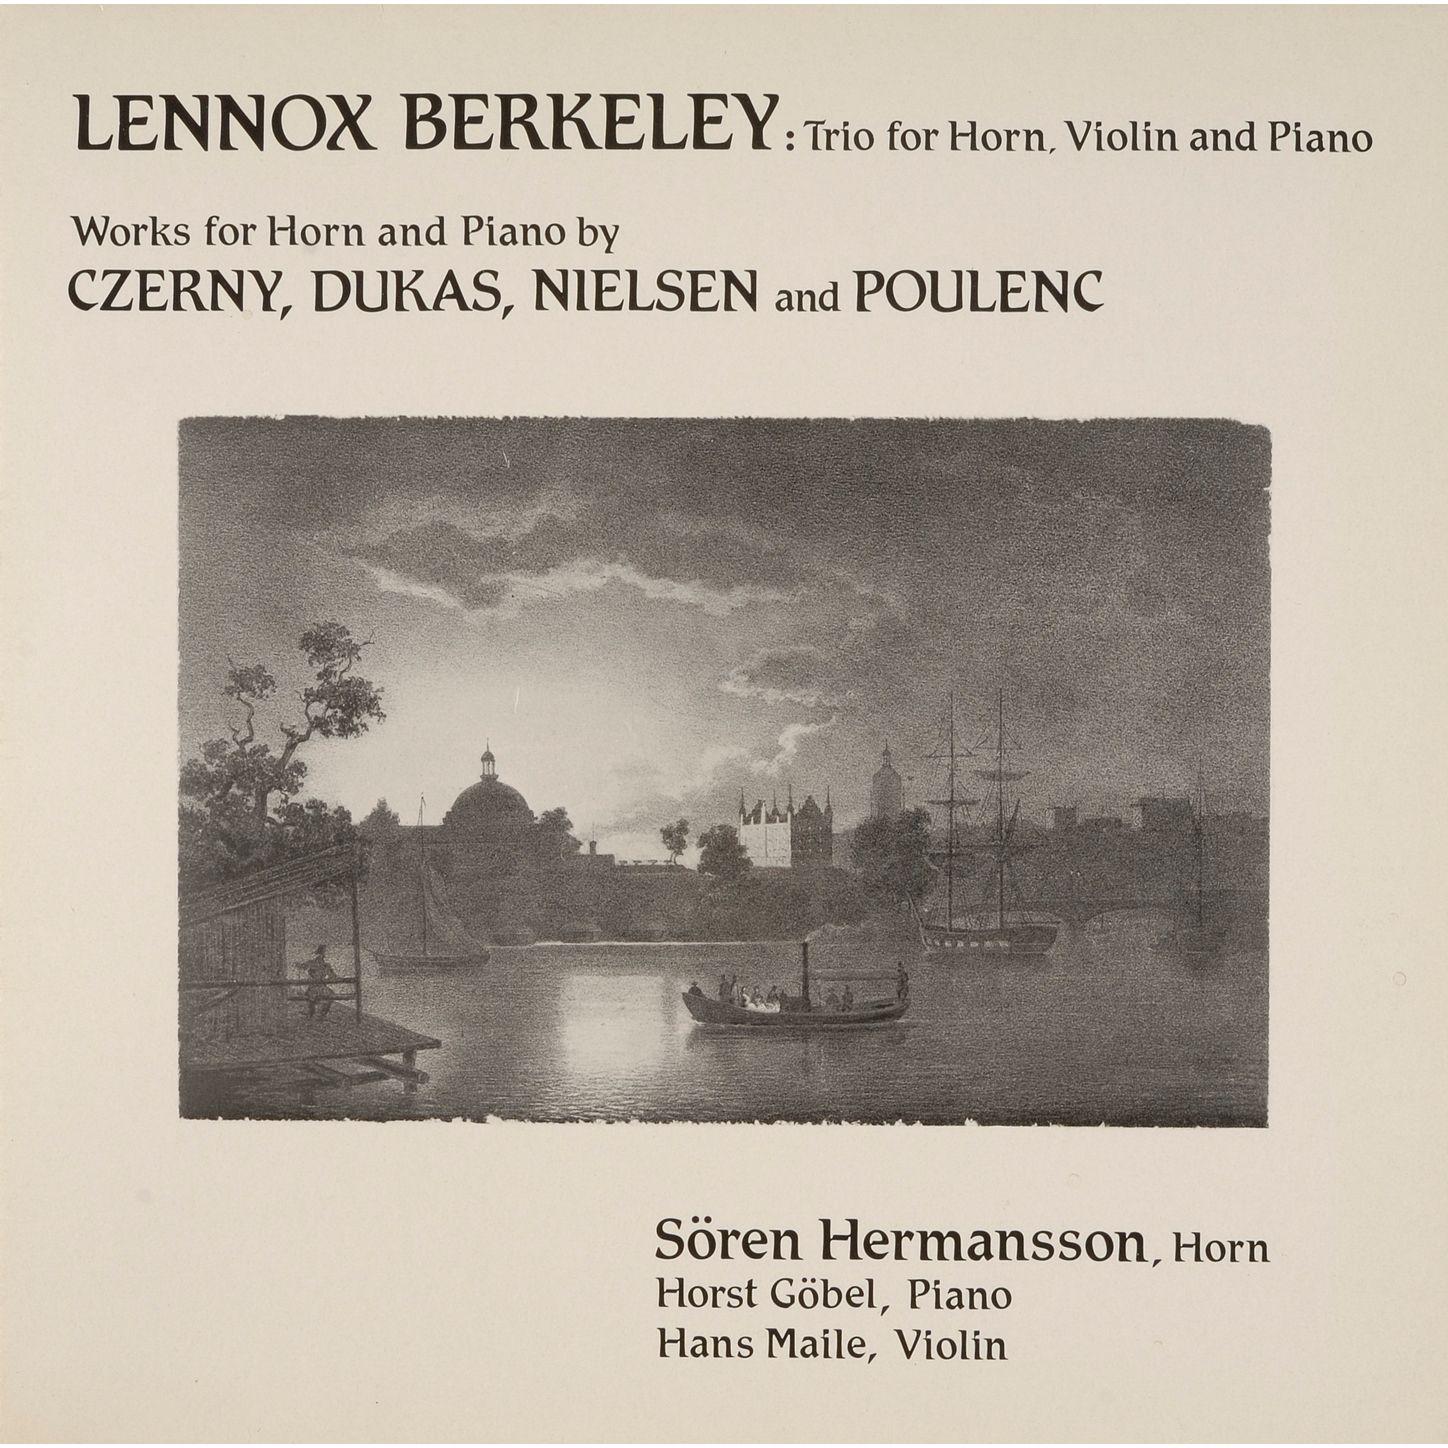 Soeren Hermansson - Trio für Horn, Violine und Klavier, Op. 44: II. Lento